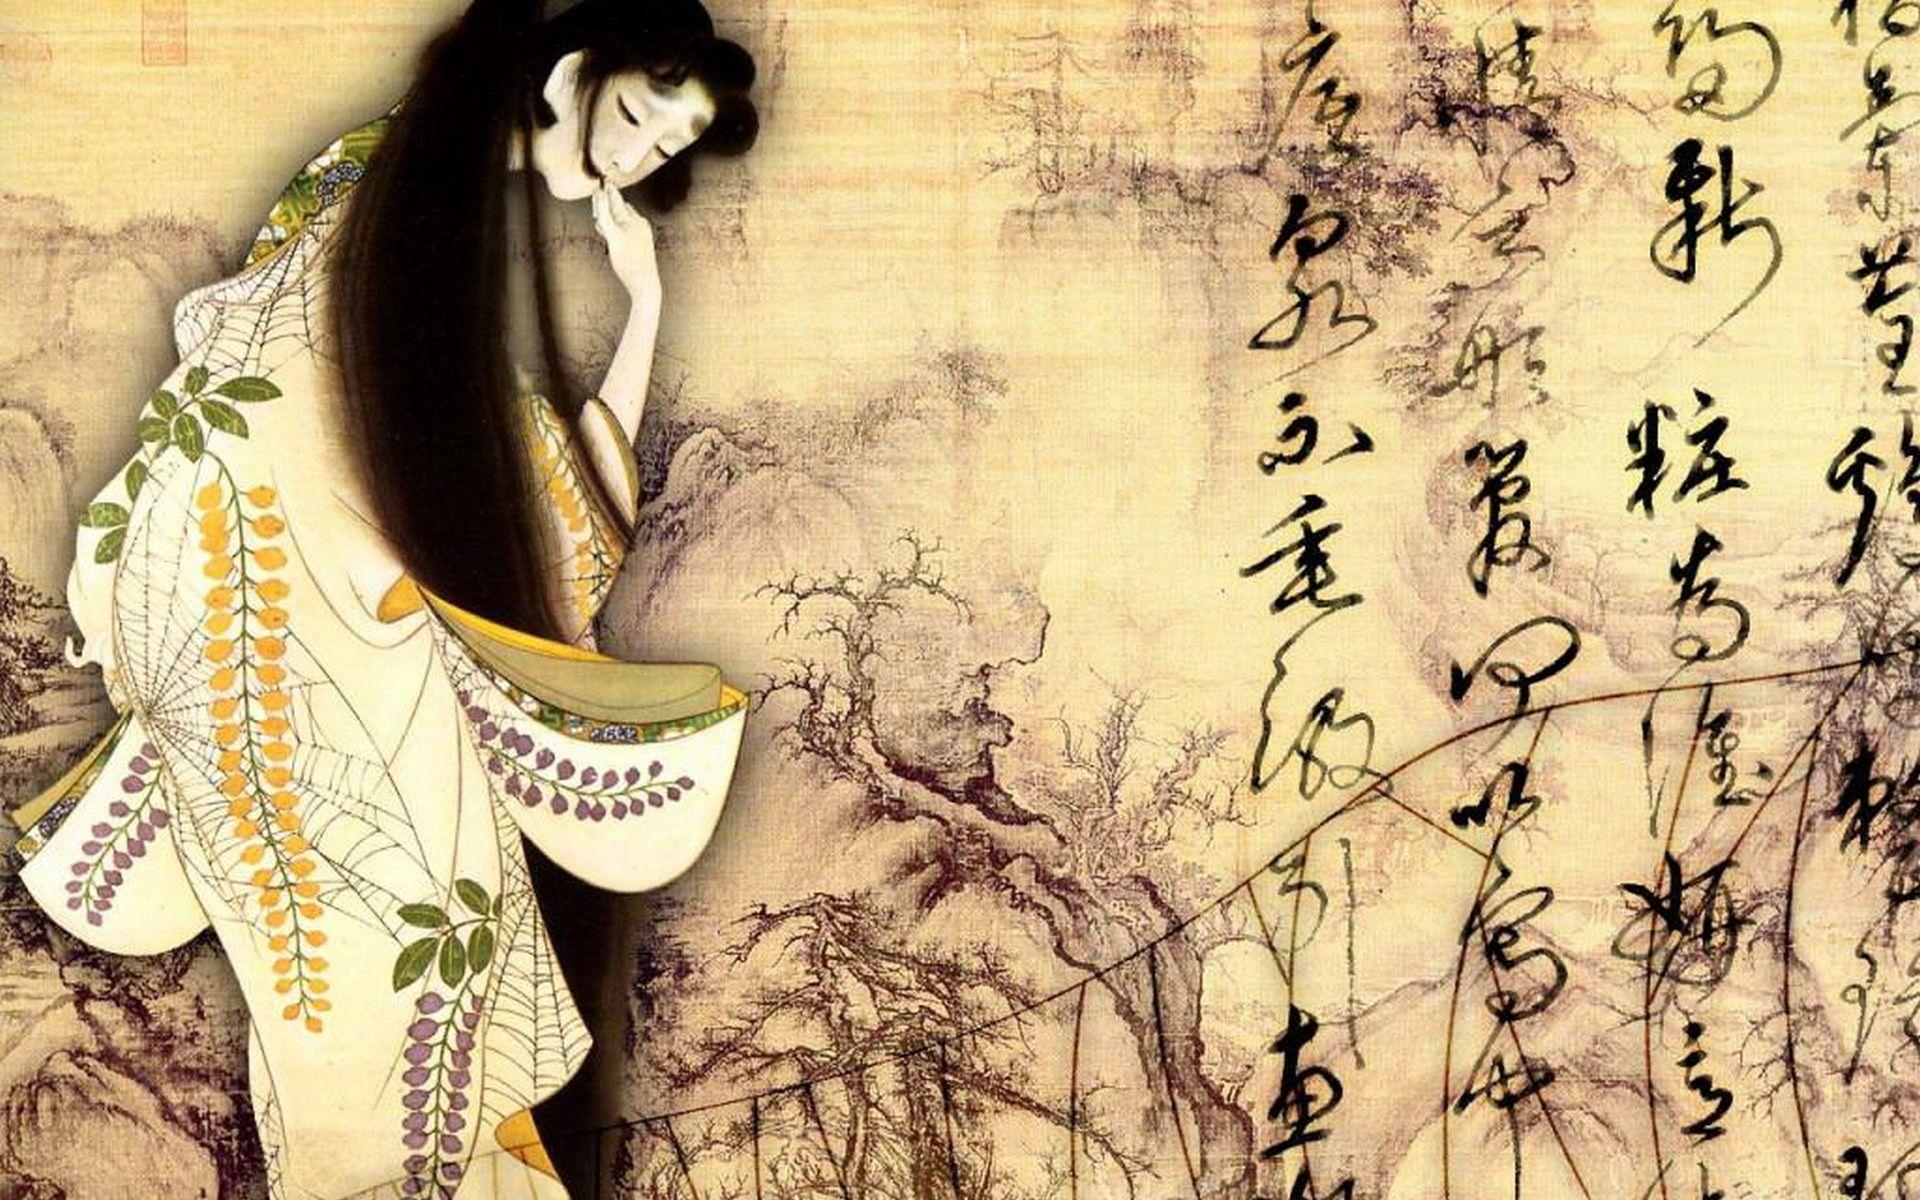 Japanese Geisha Wallpaper